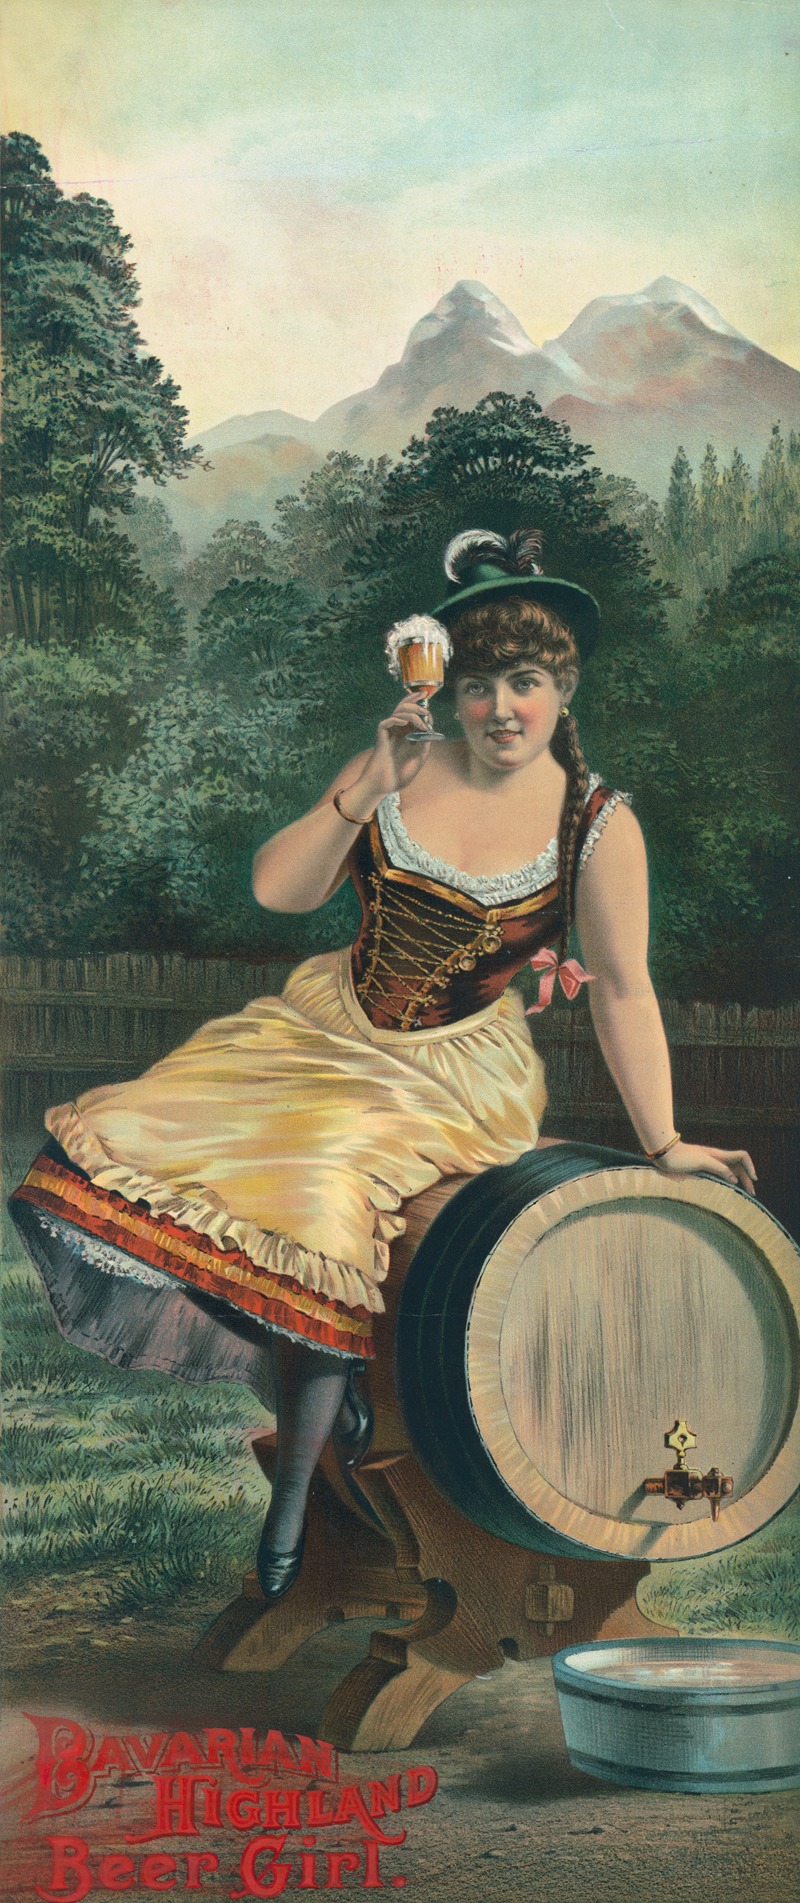 Henry Jerome Schile - Bavarian highland beer girl